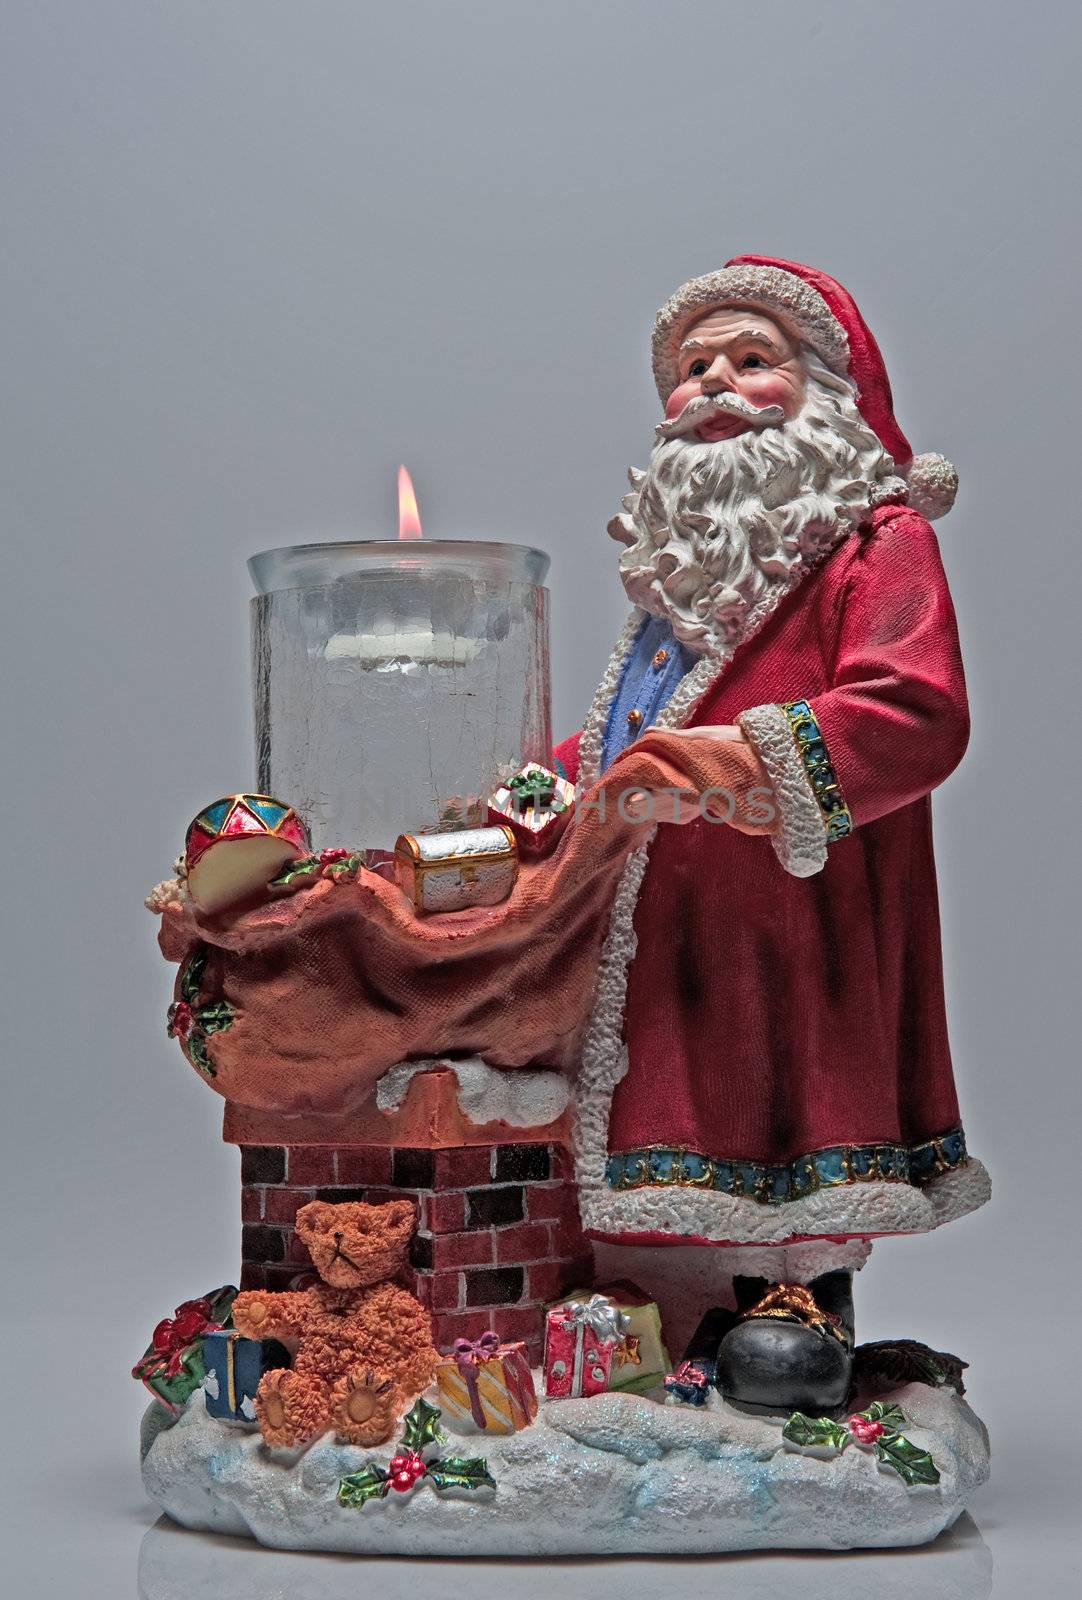 Santa Claus statue photograph taken in studio